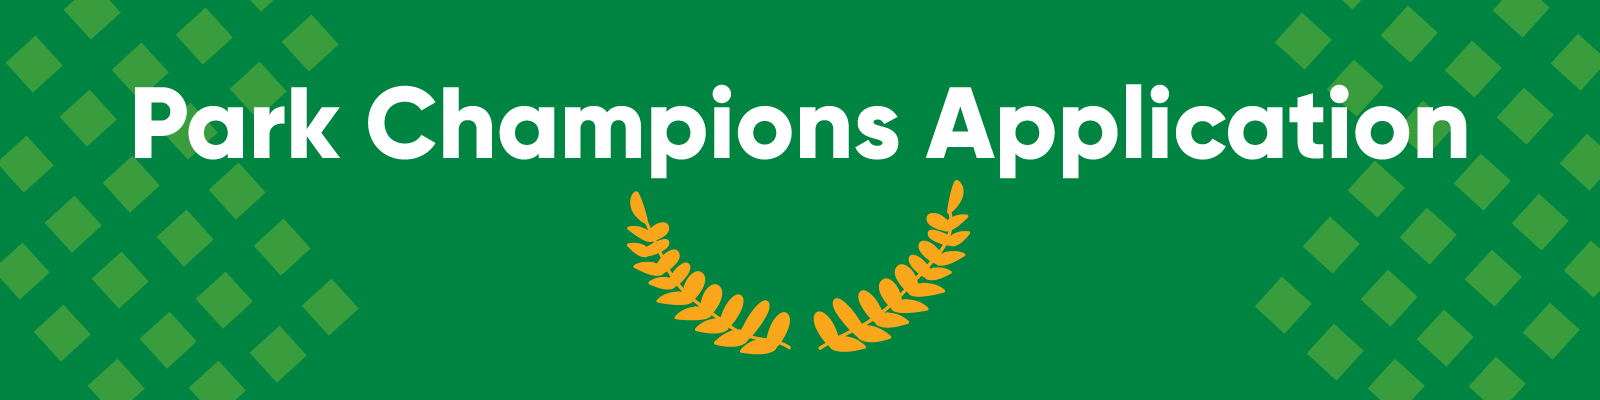 Image stating "Park Champions Application"